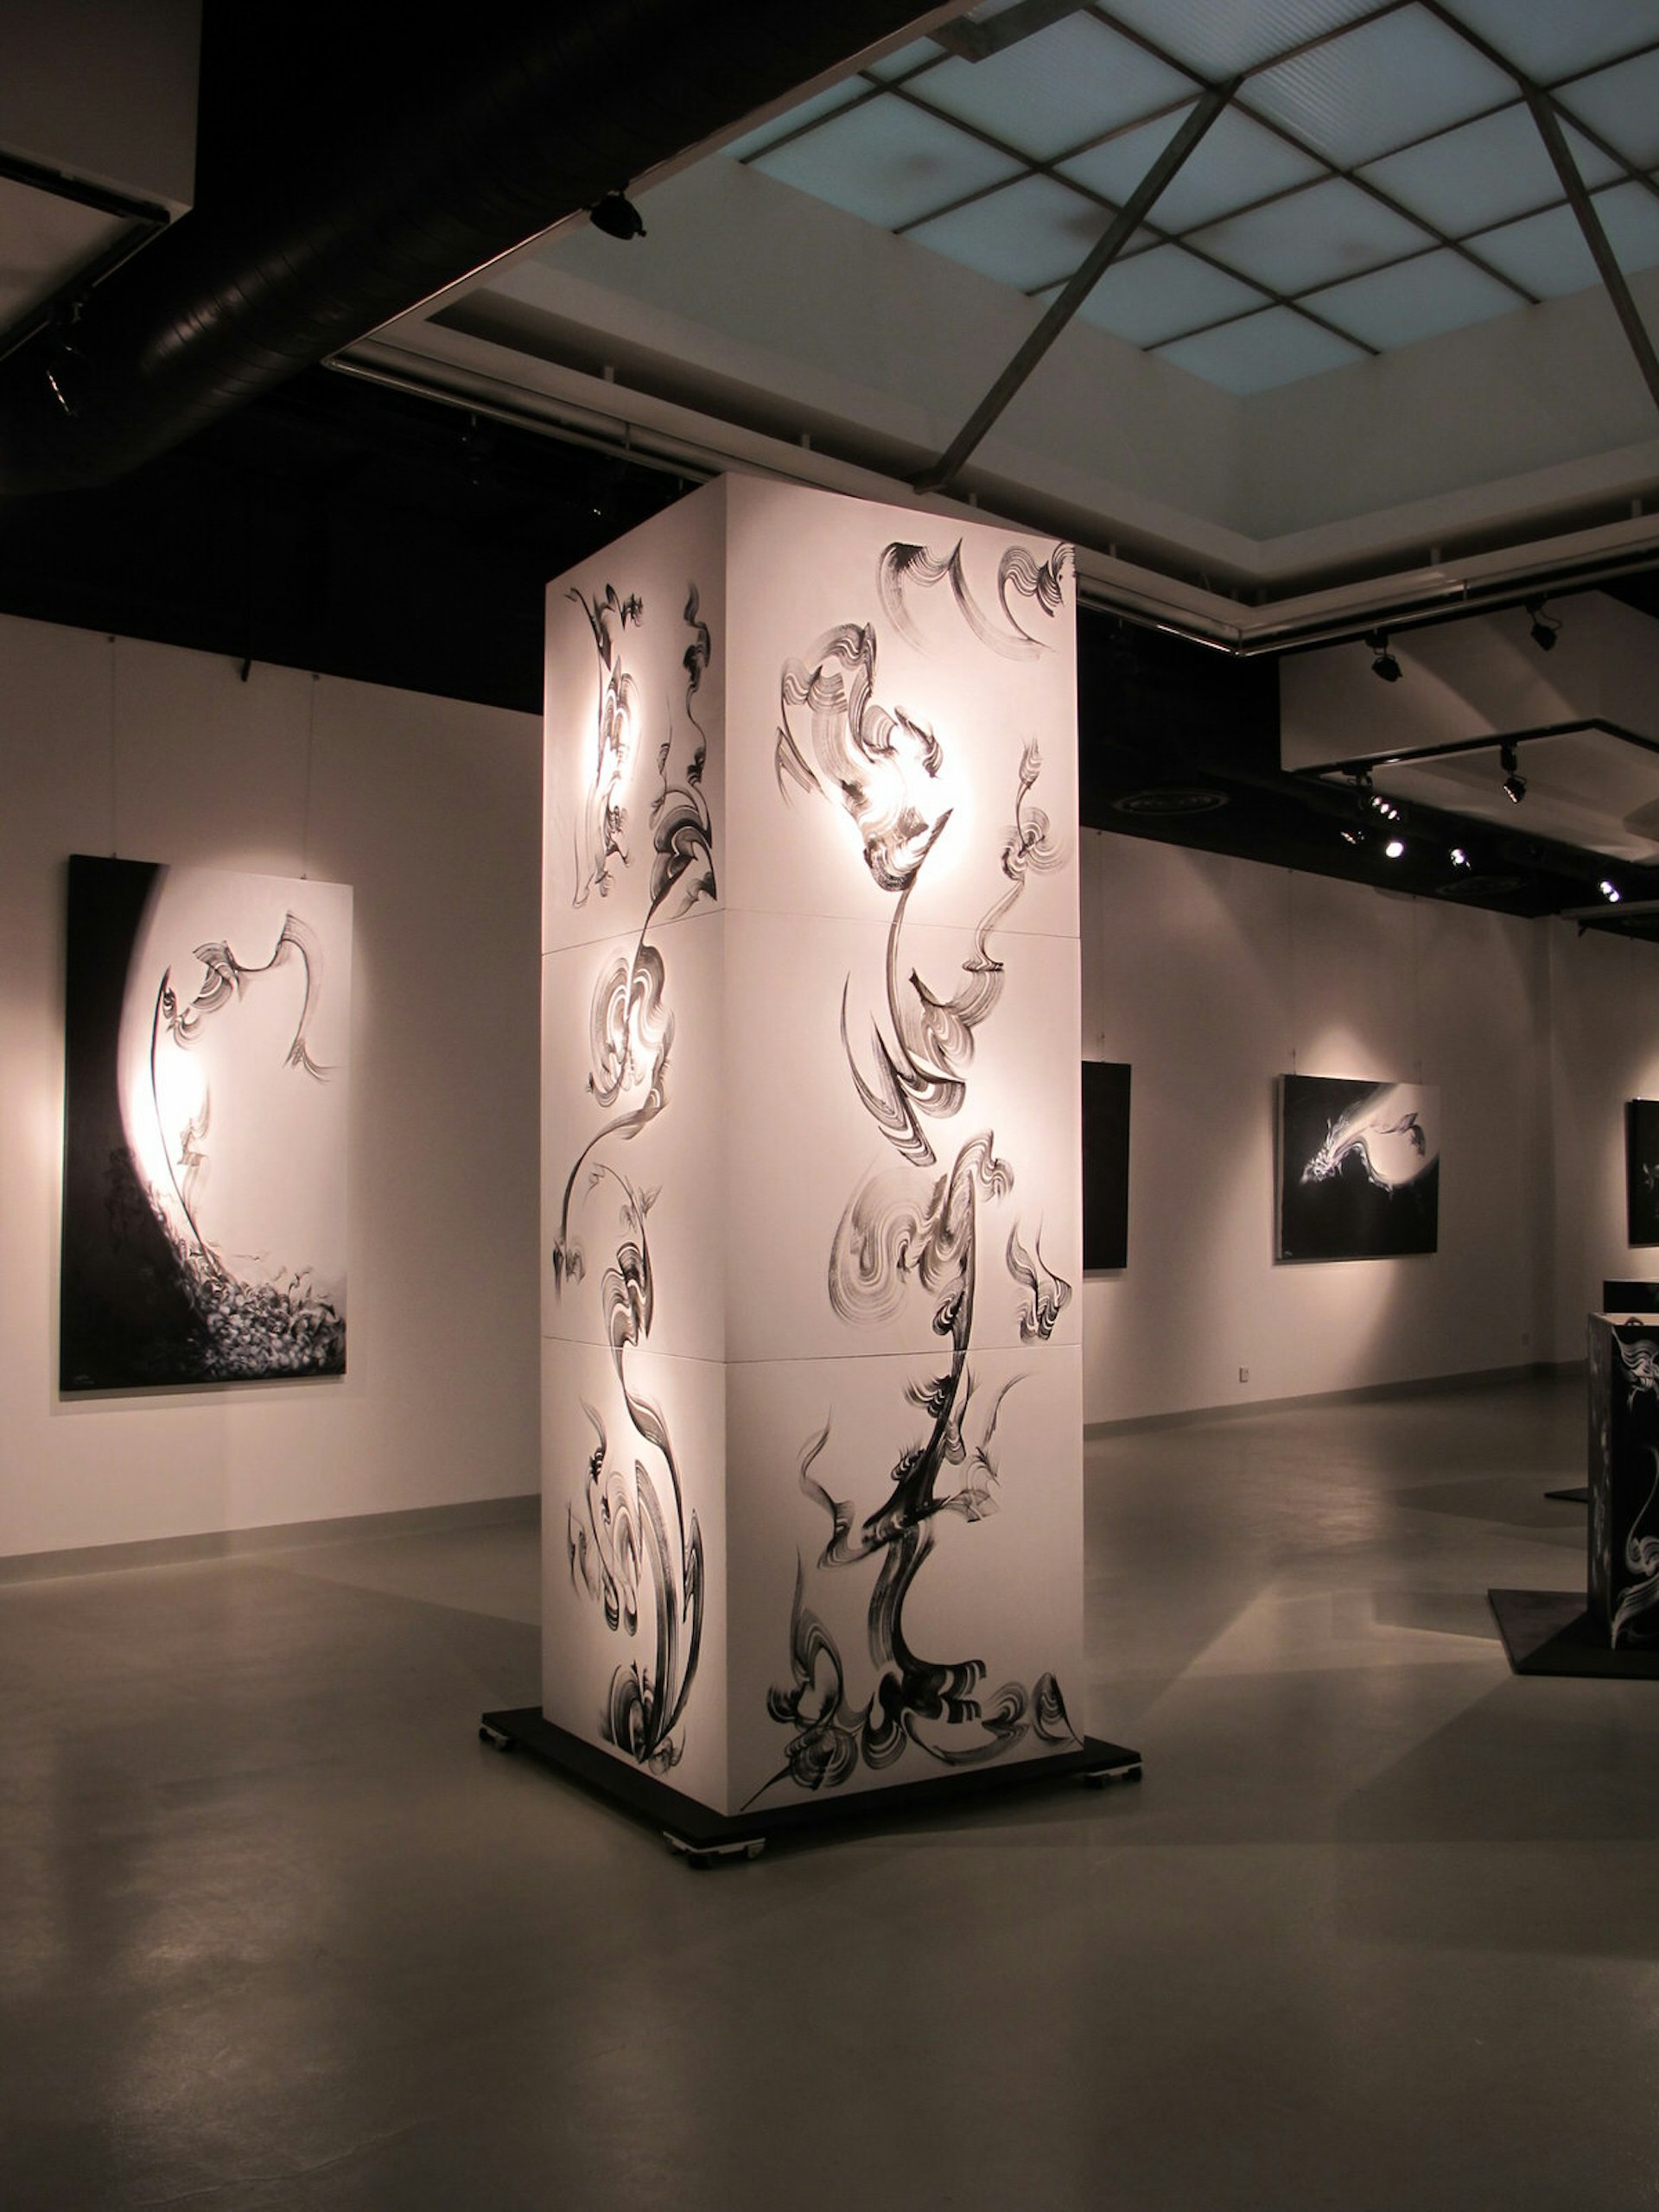 Black and white painting installation from Saudi artist Nasser Al Turki